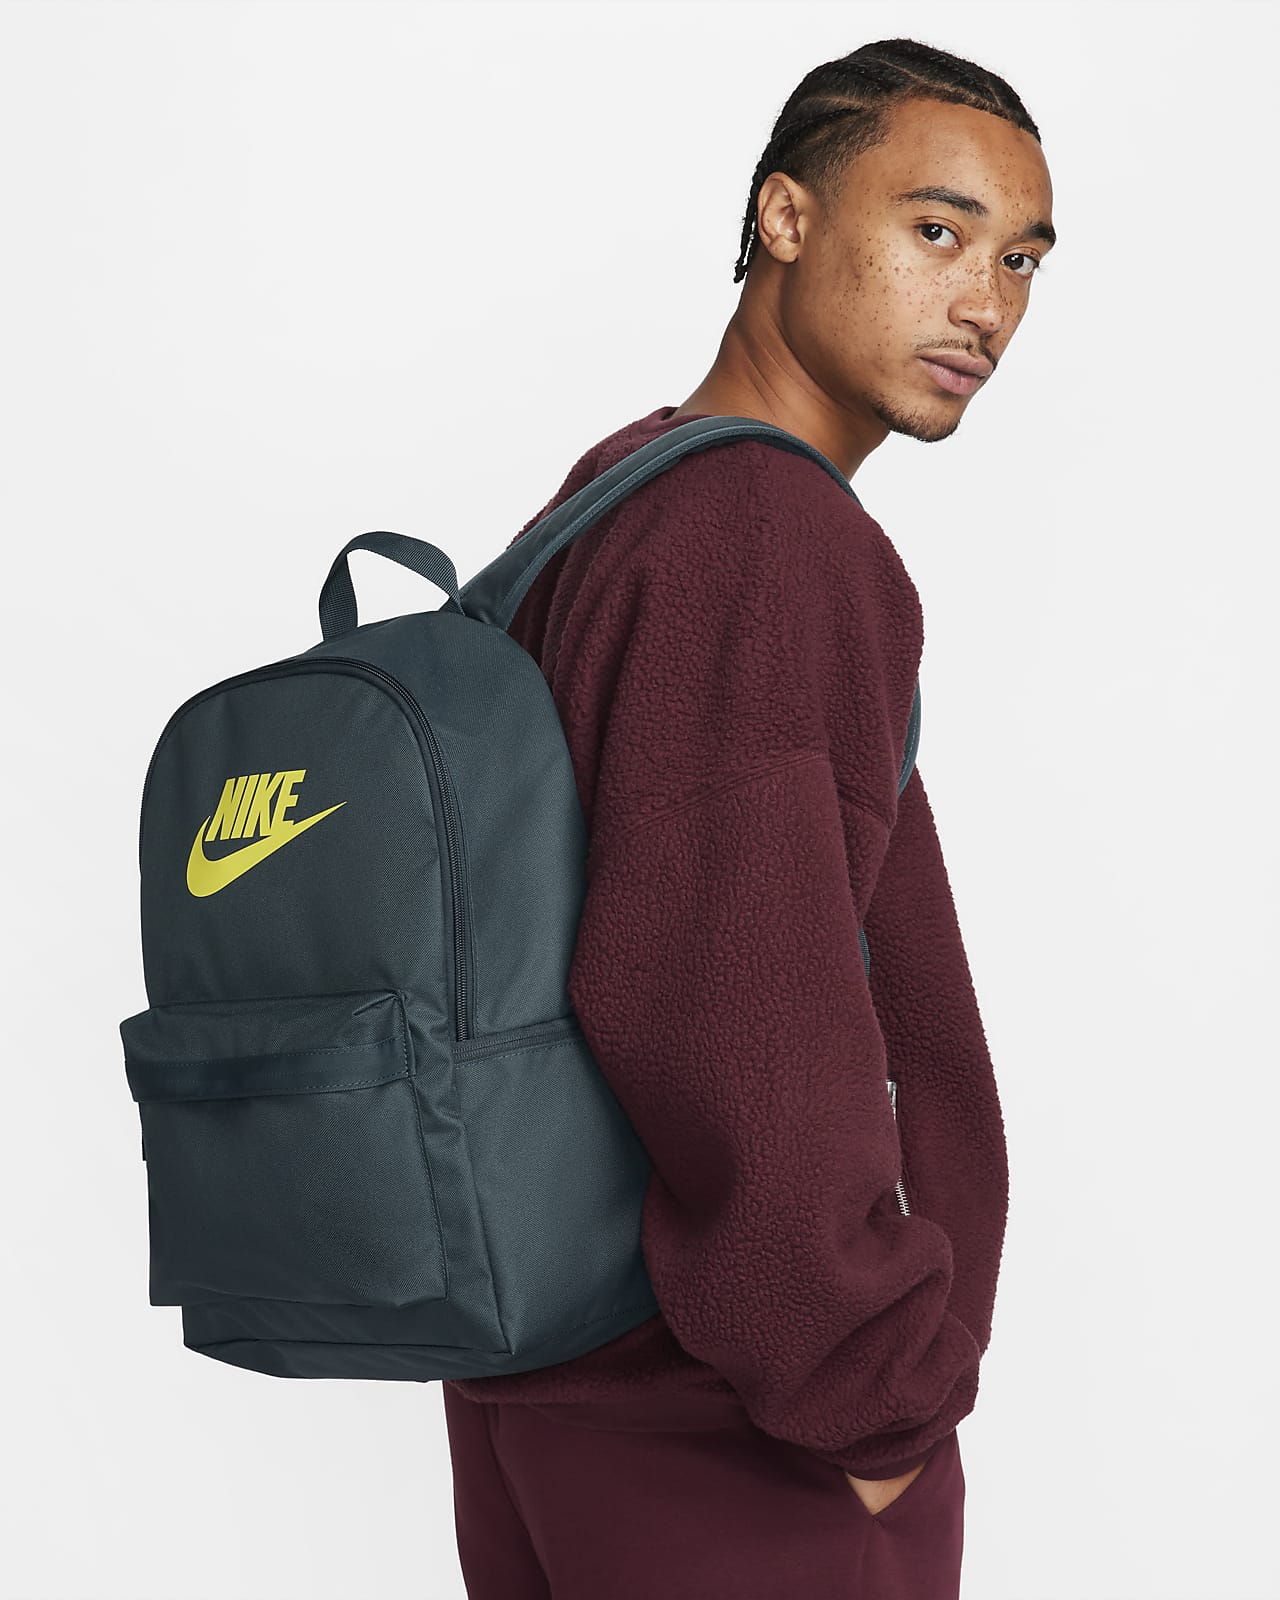 Nike Top Handle Backpacks